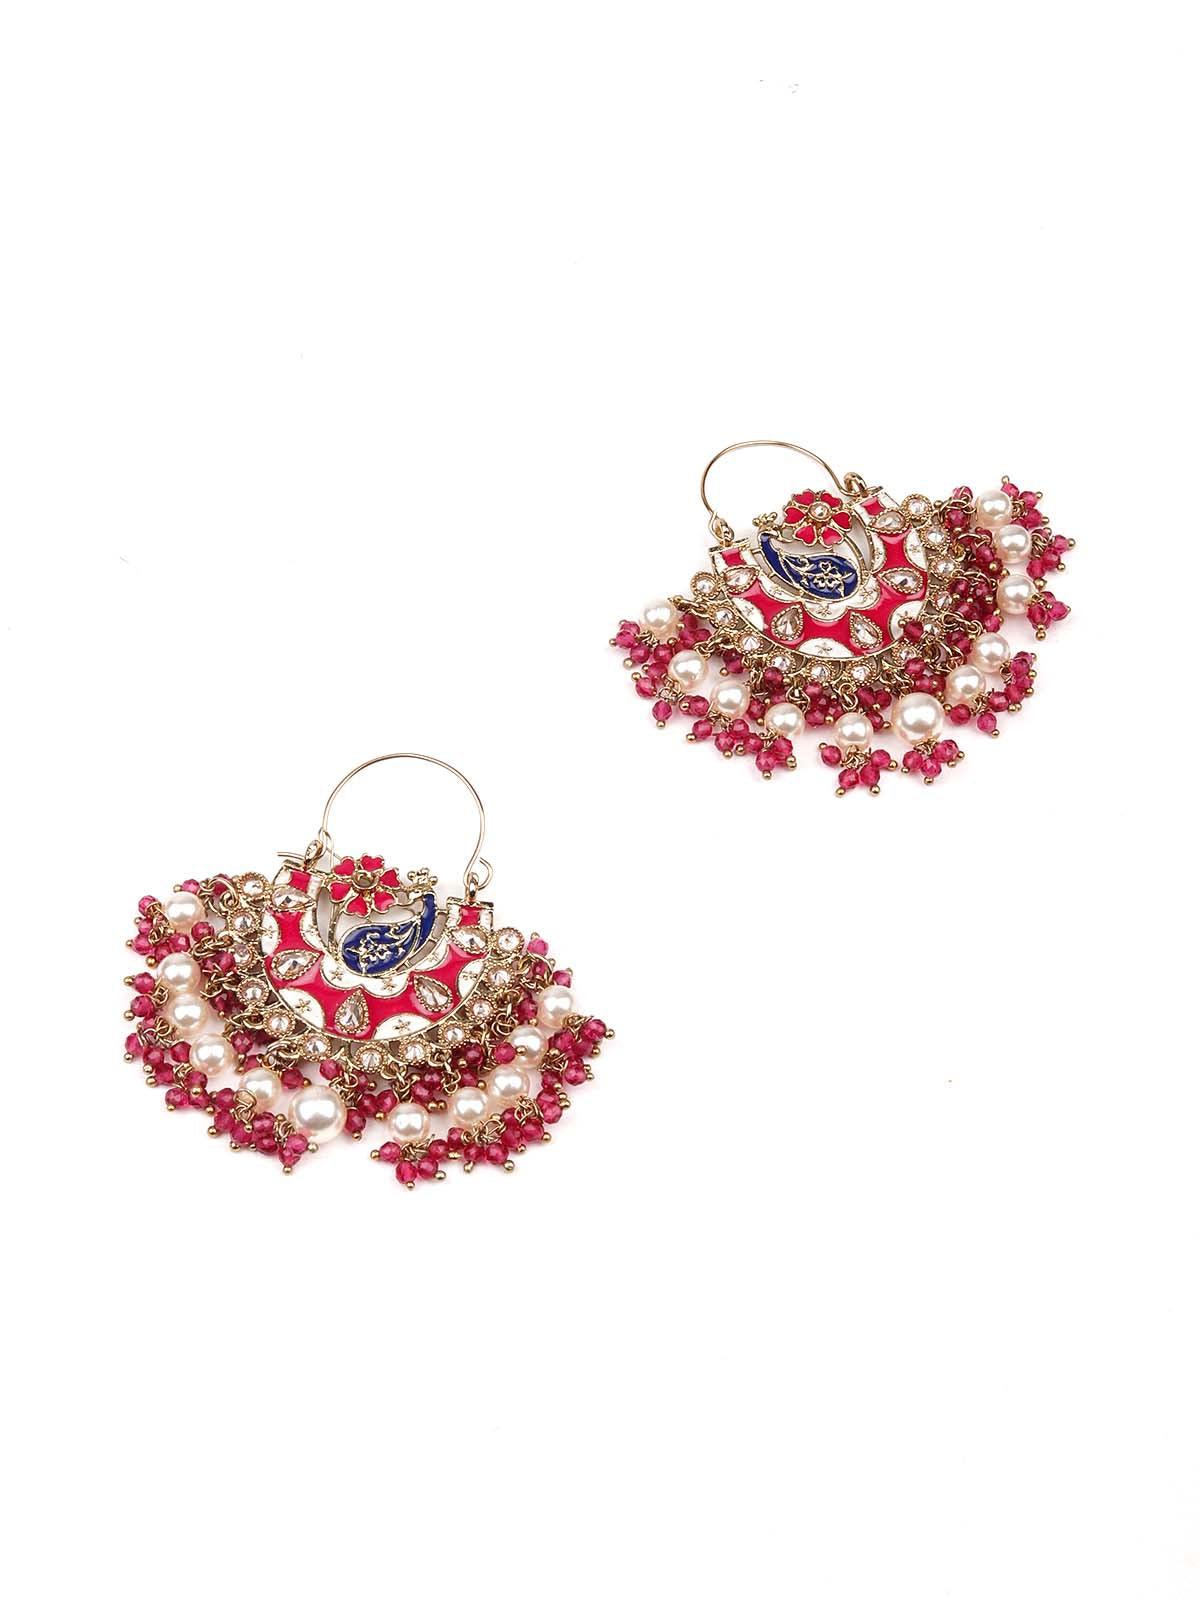 Stunning red beaded statement drop earrings - Odette